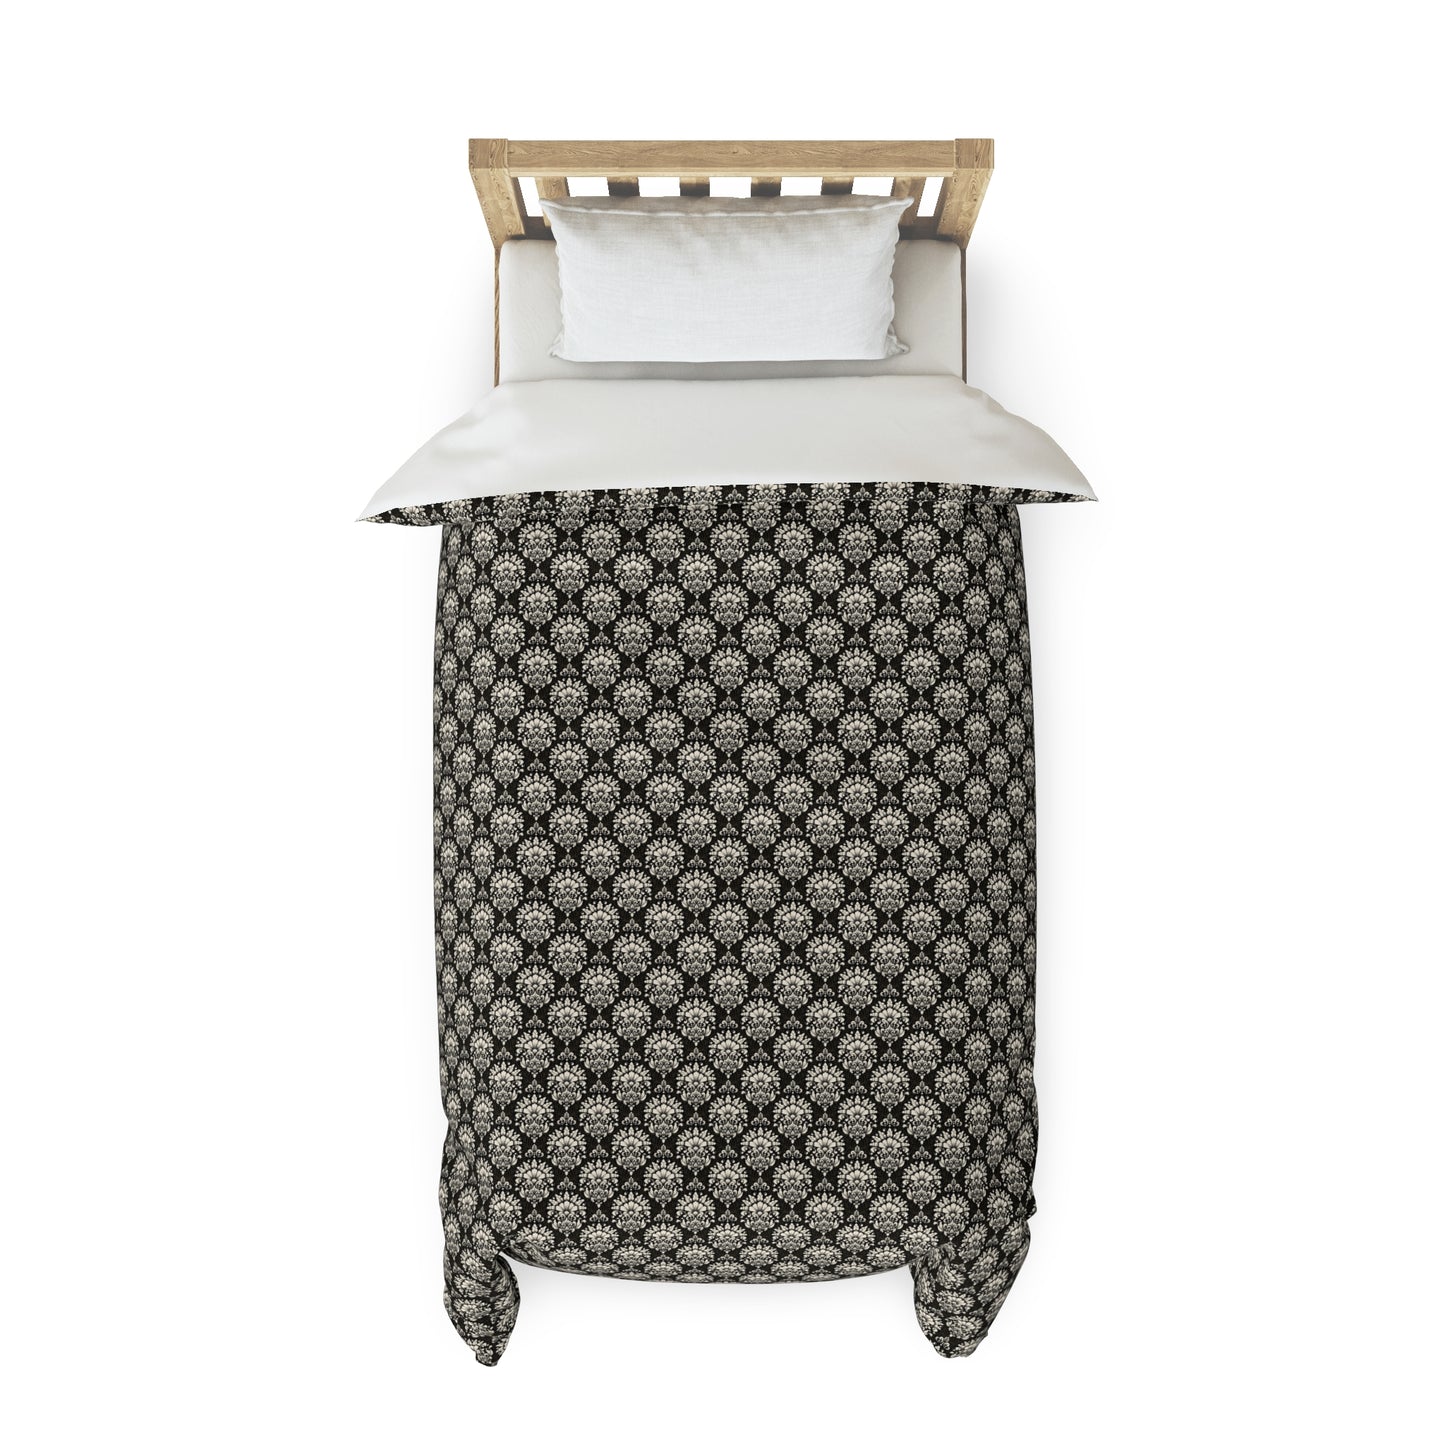 Niccie's Luxurious Royal Black Pattern Duvet Cover Bedding